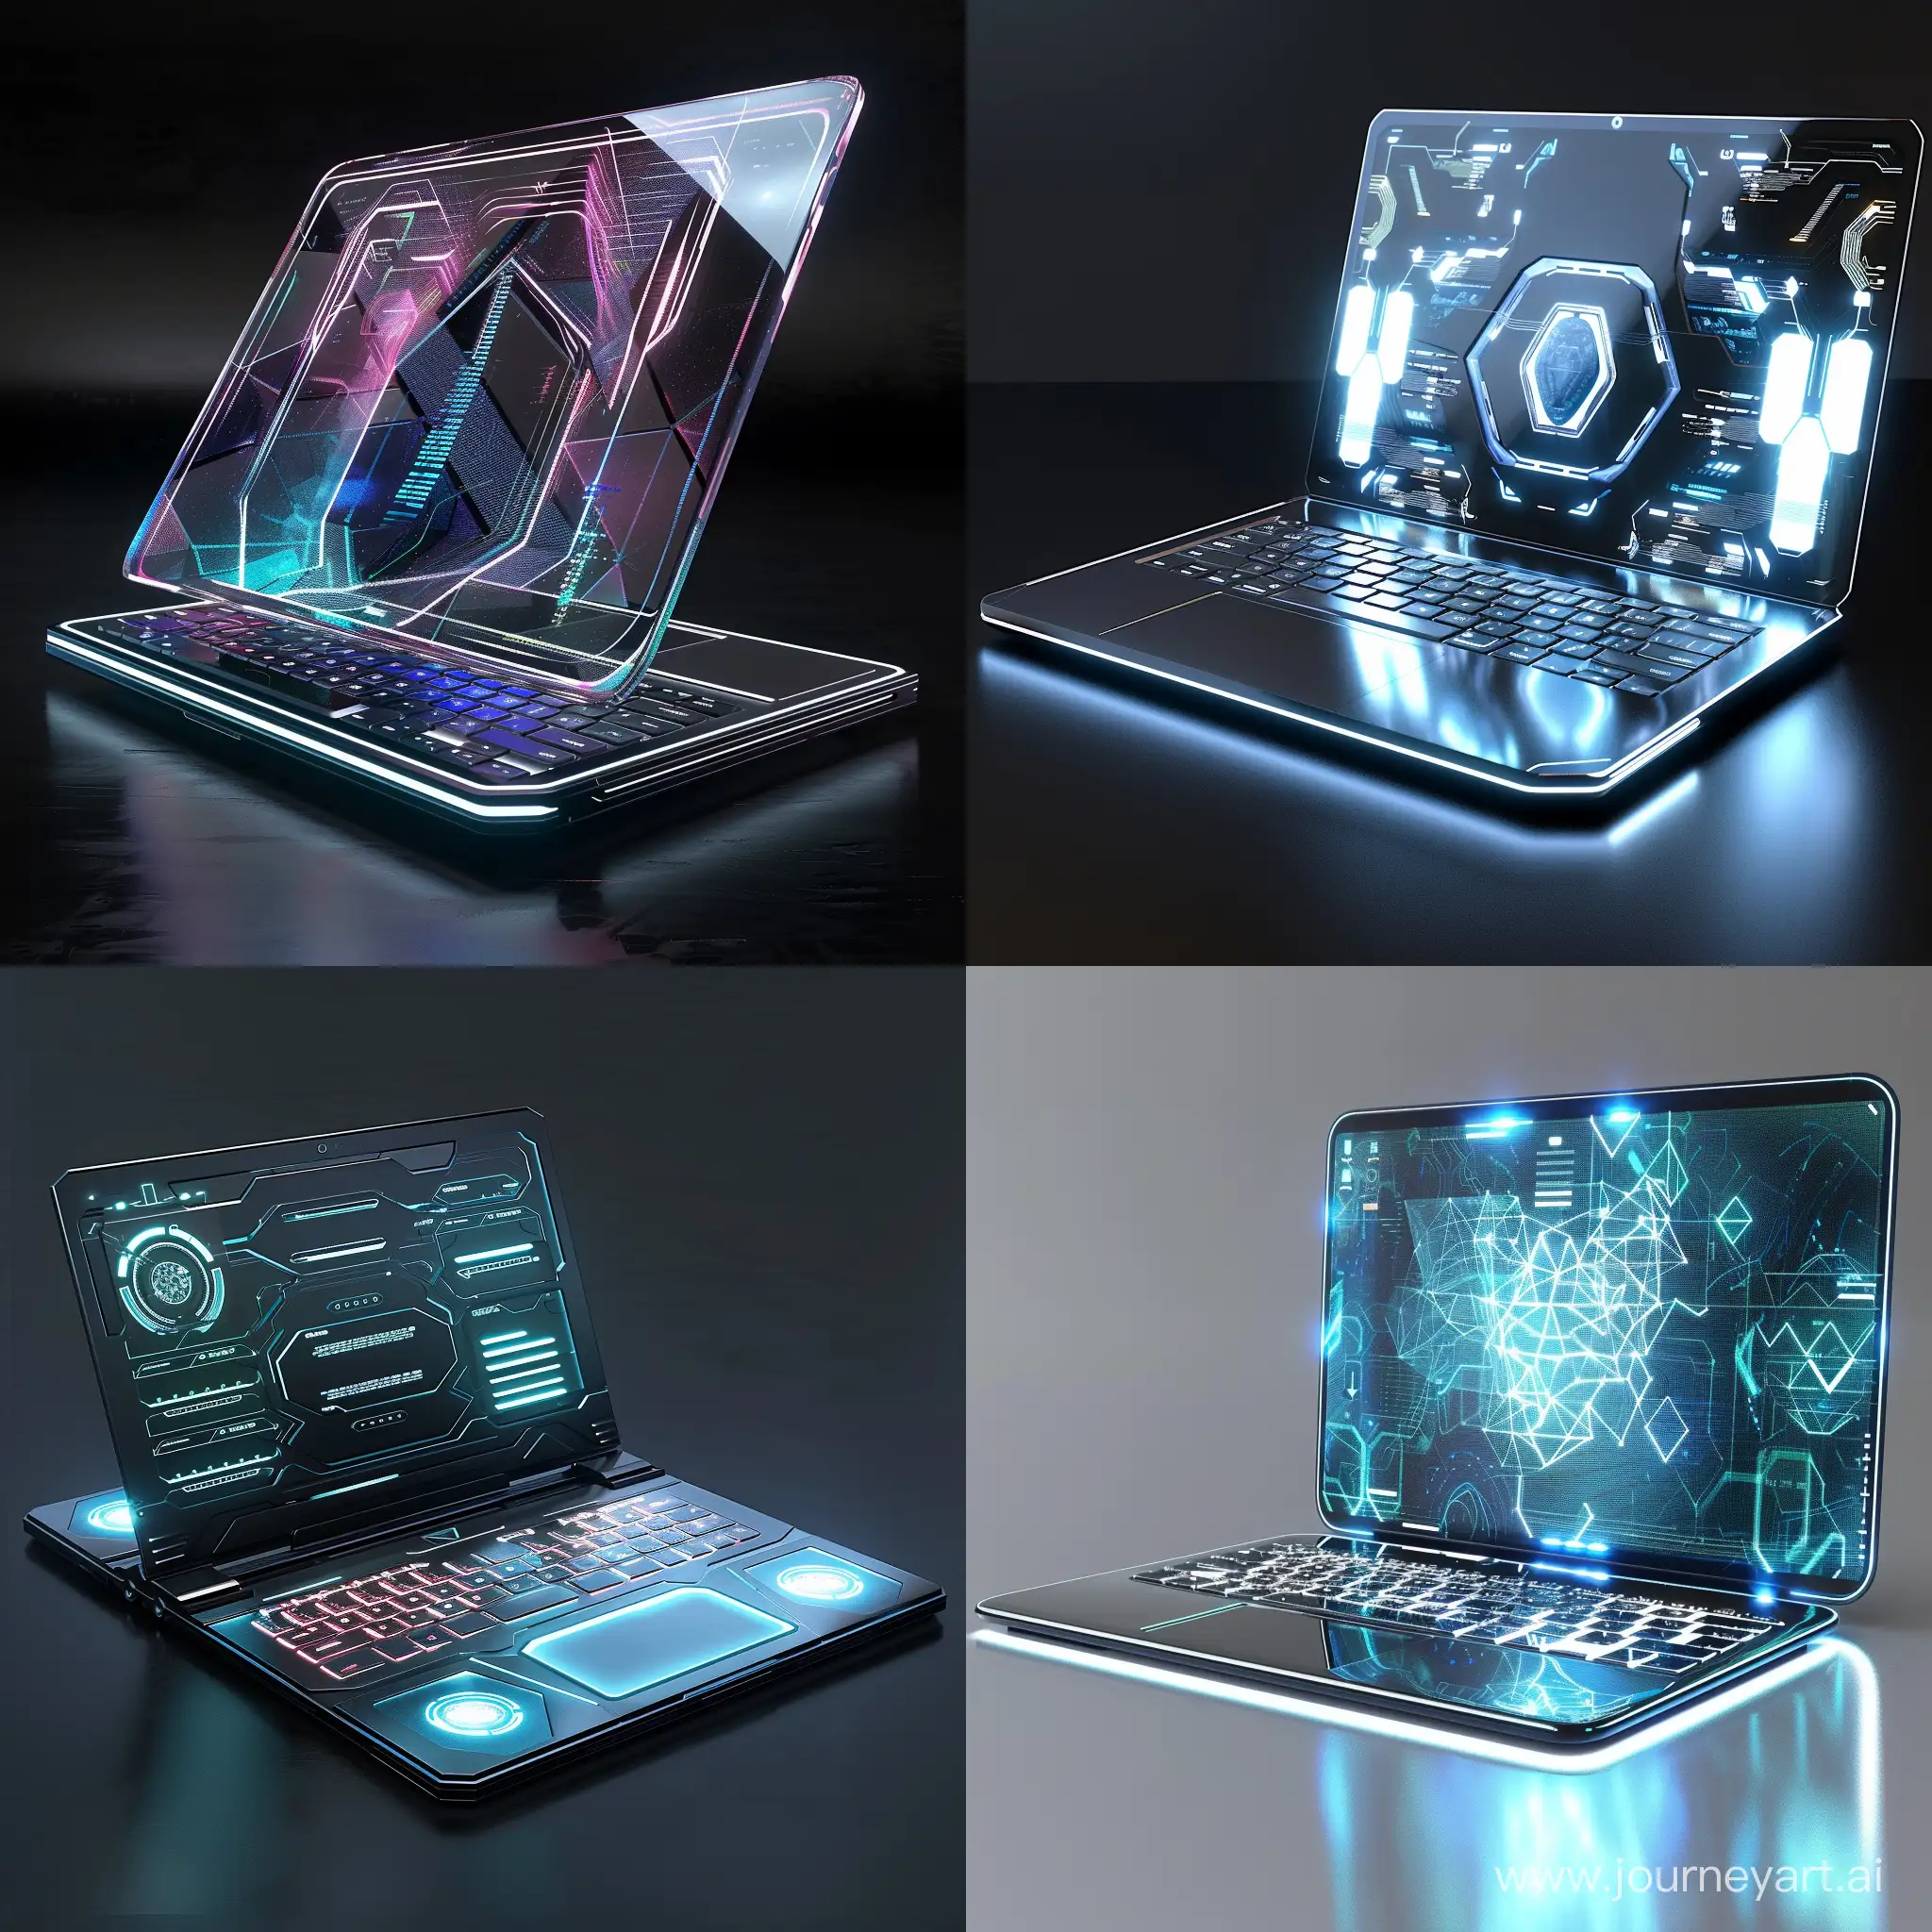 Futuristic-Laptop-with-Composite-Smart-Materials-in-Octane-Render